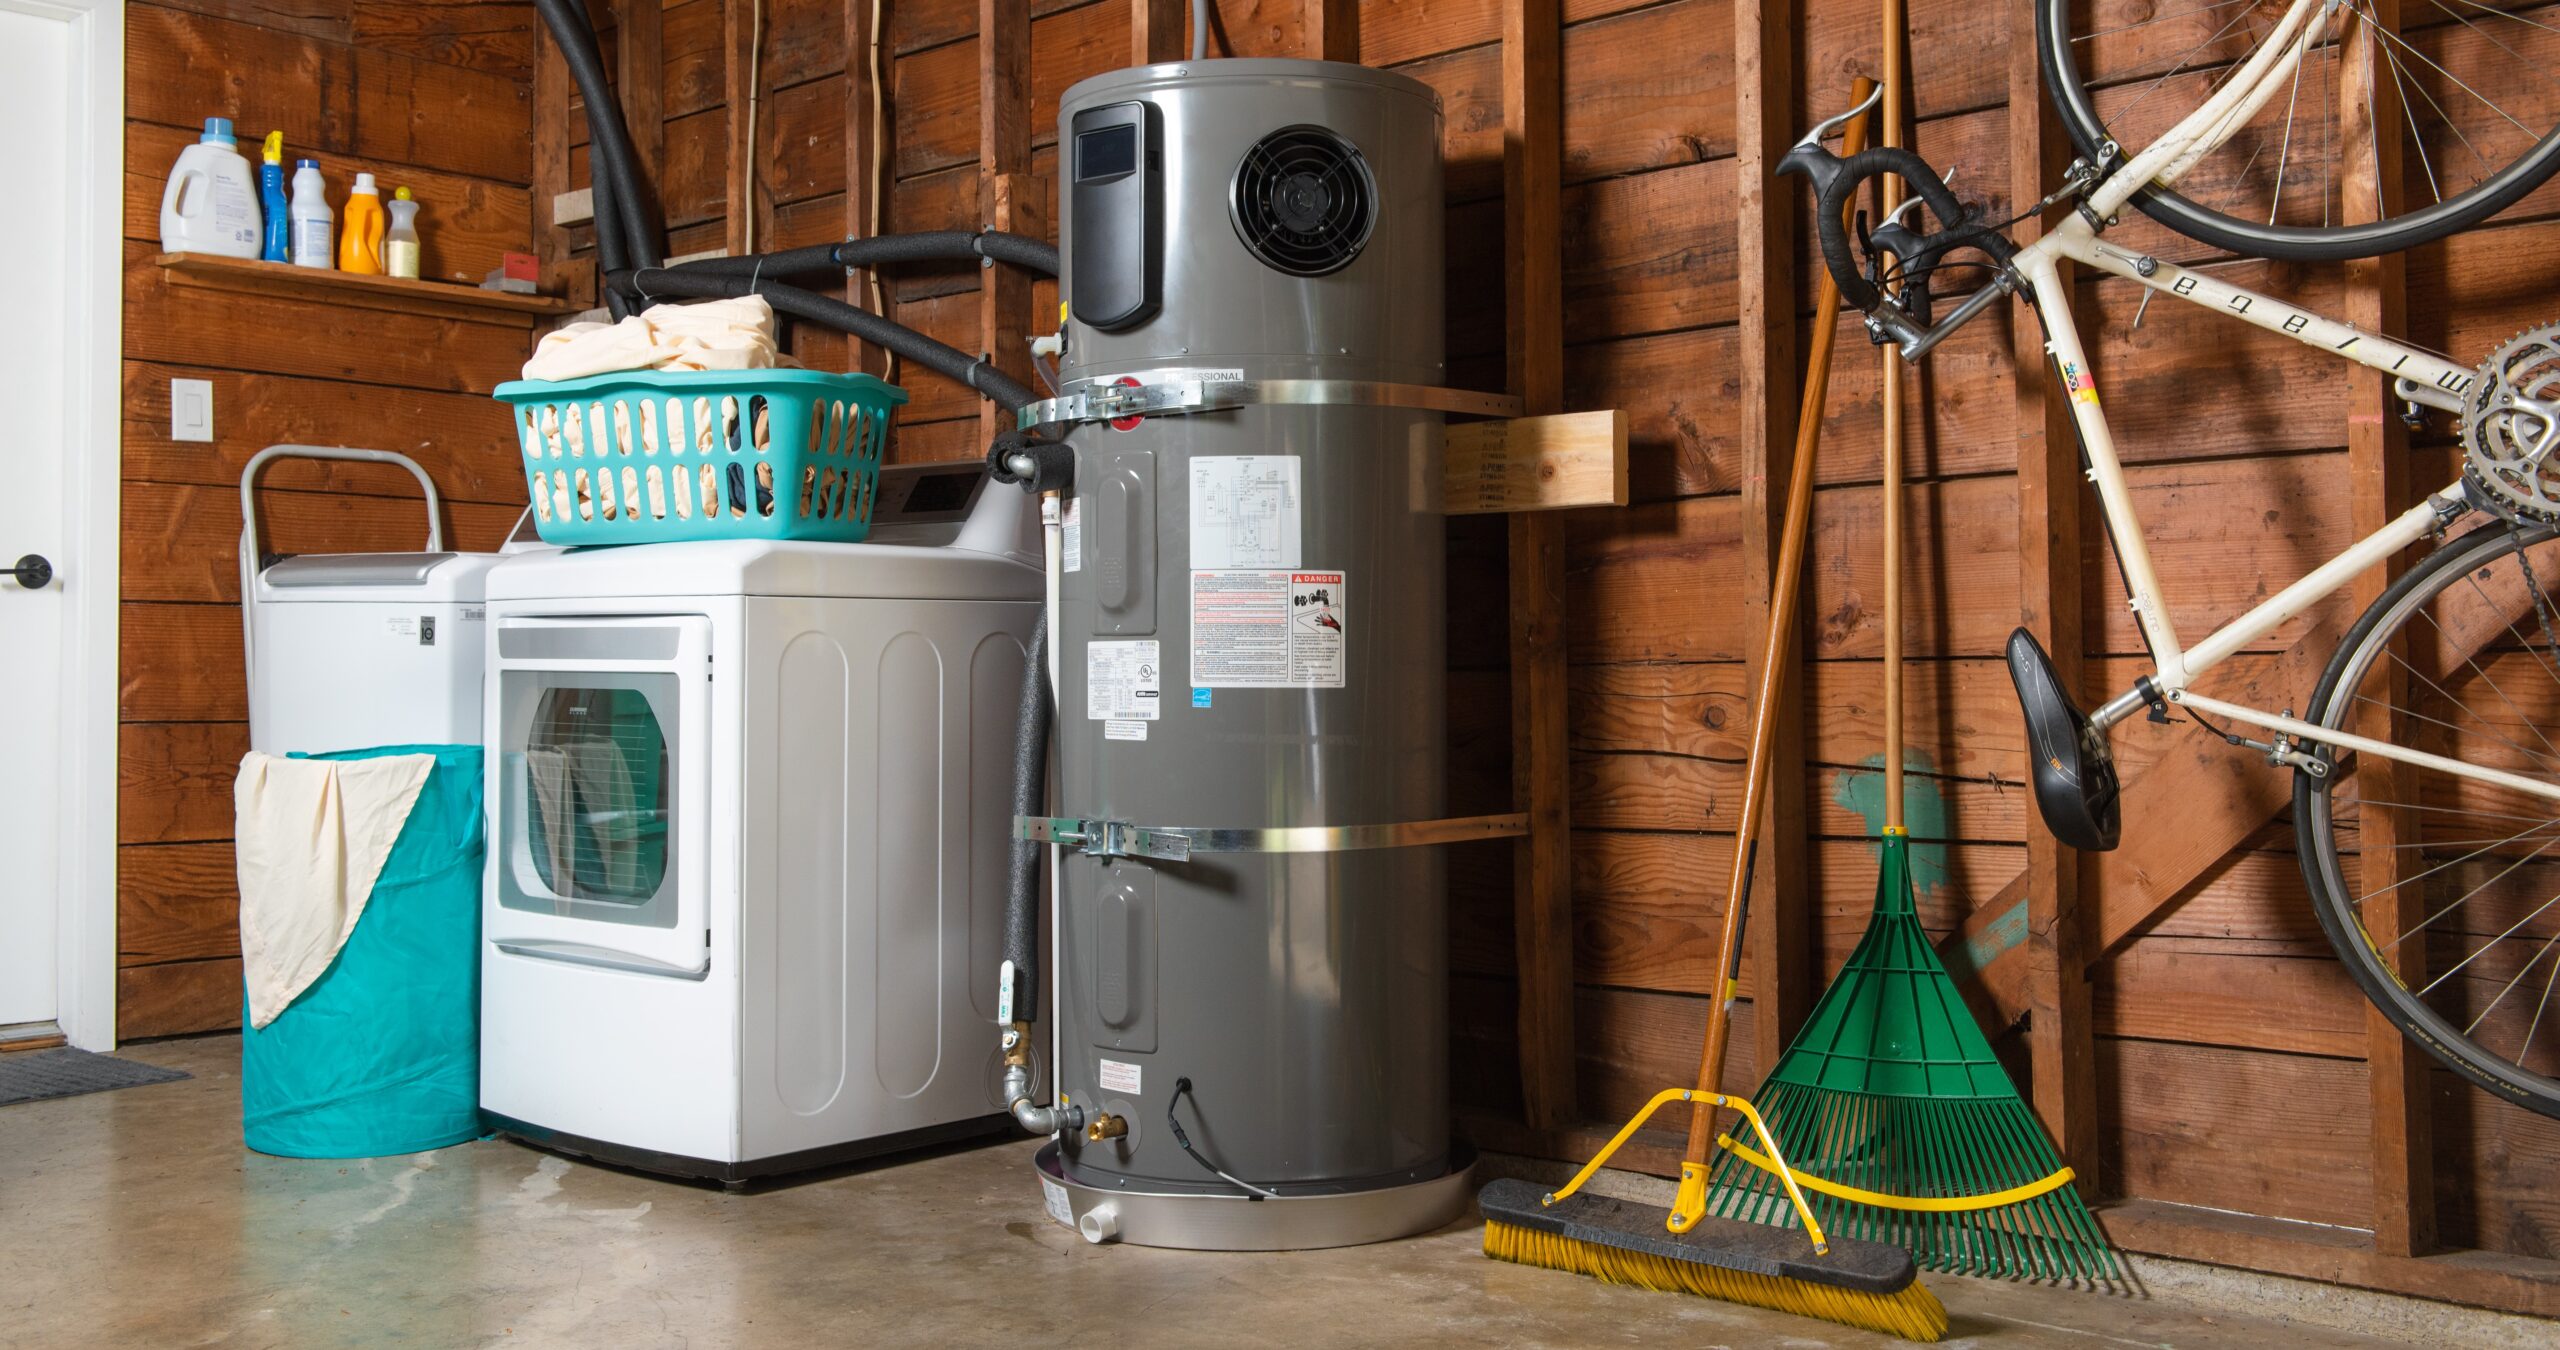 Interior viewe of residential garage housing washer/dryer, heat pump water heater bicycle and gardening tools - photo